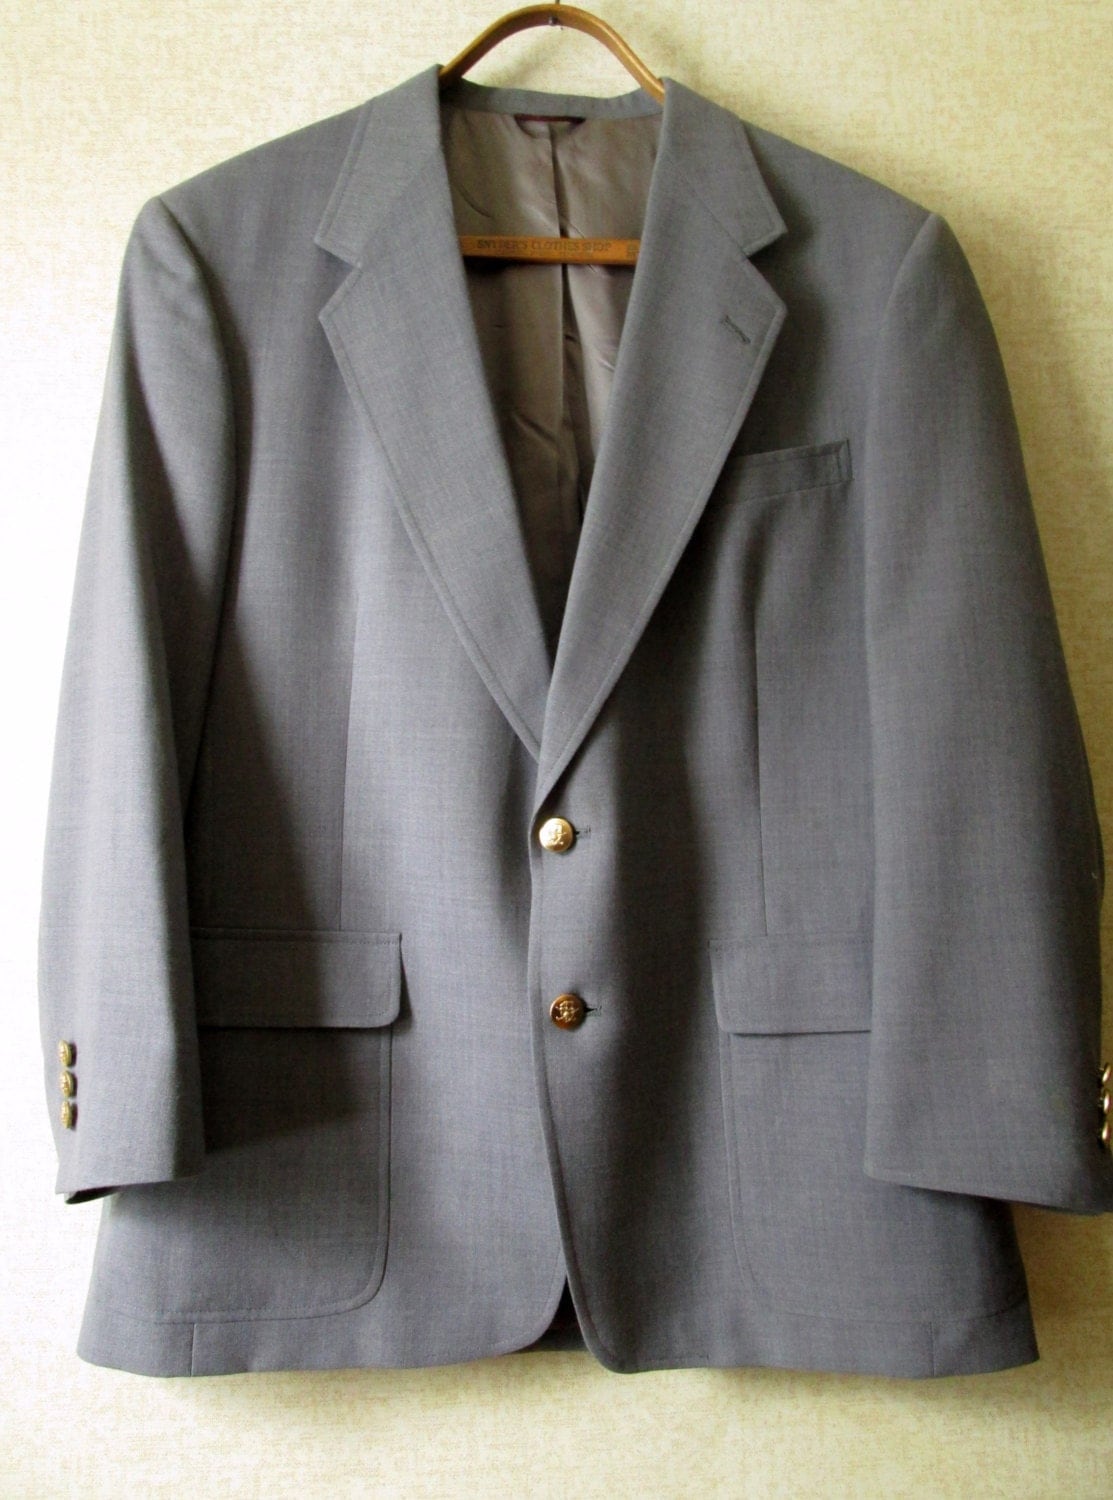 SALE Grey Sport Coat Vintage gray blazer Jack Nicklaus sport